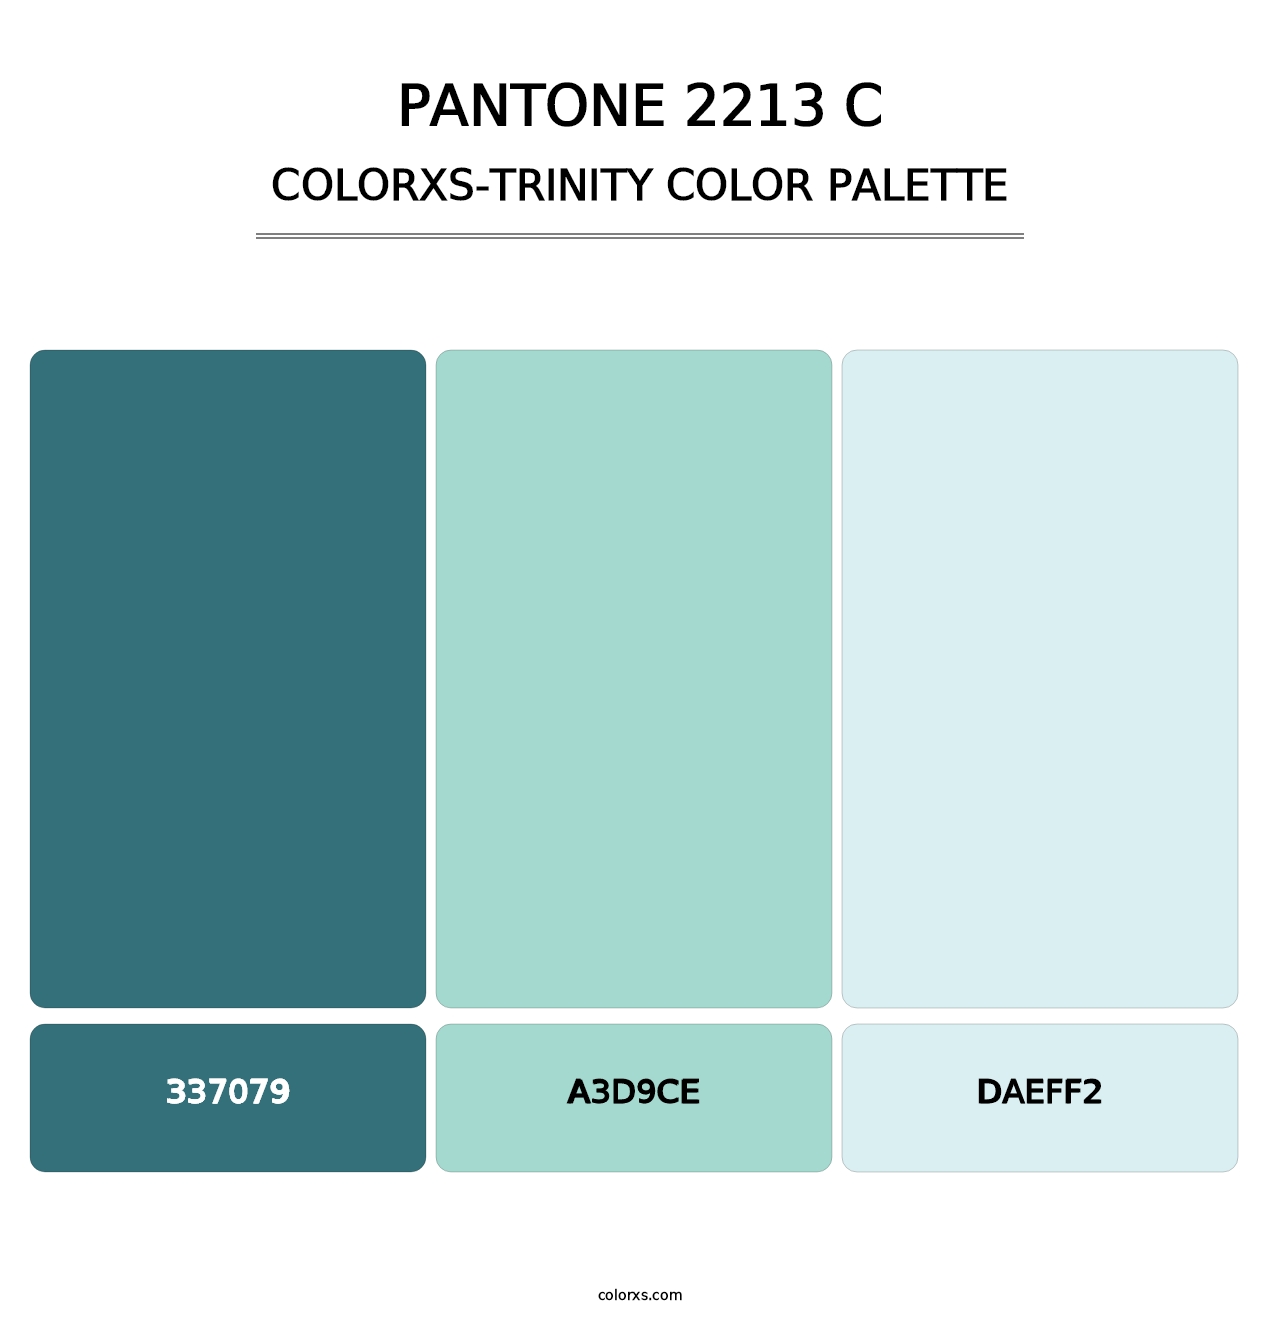 PANTONE 2213 C - Colorxs Trinity Palette